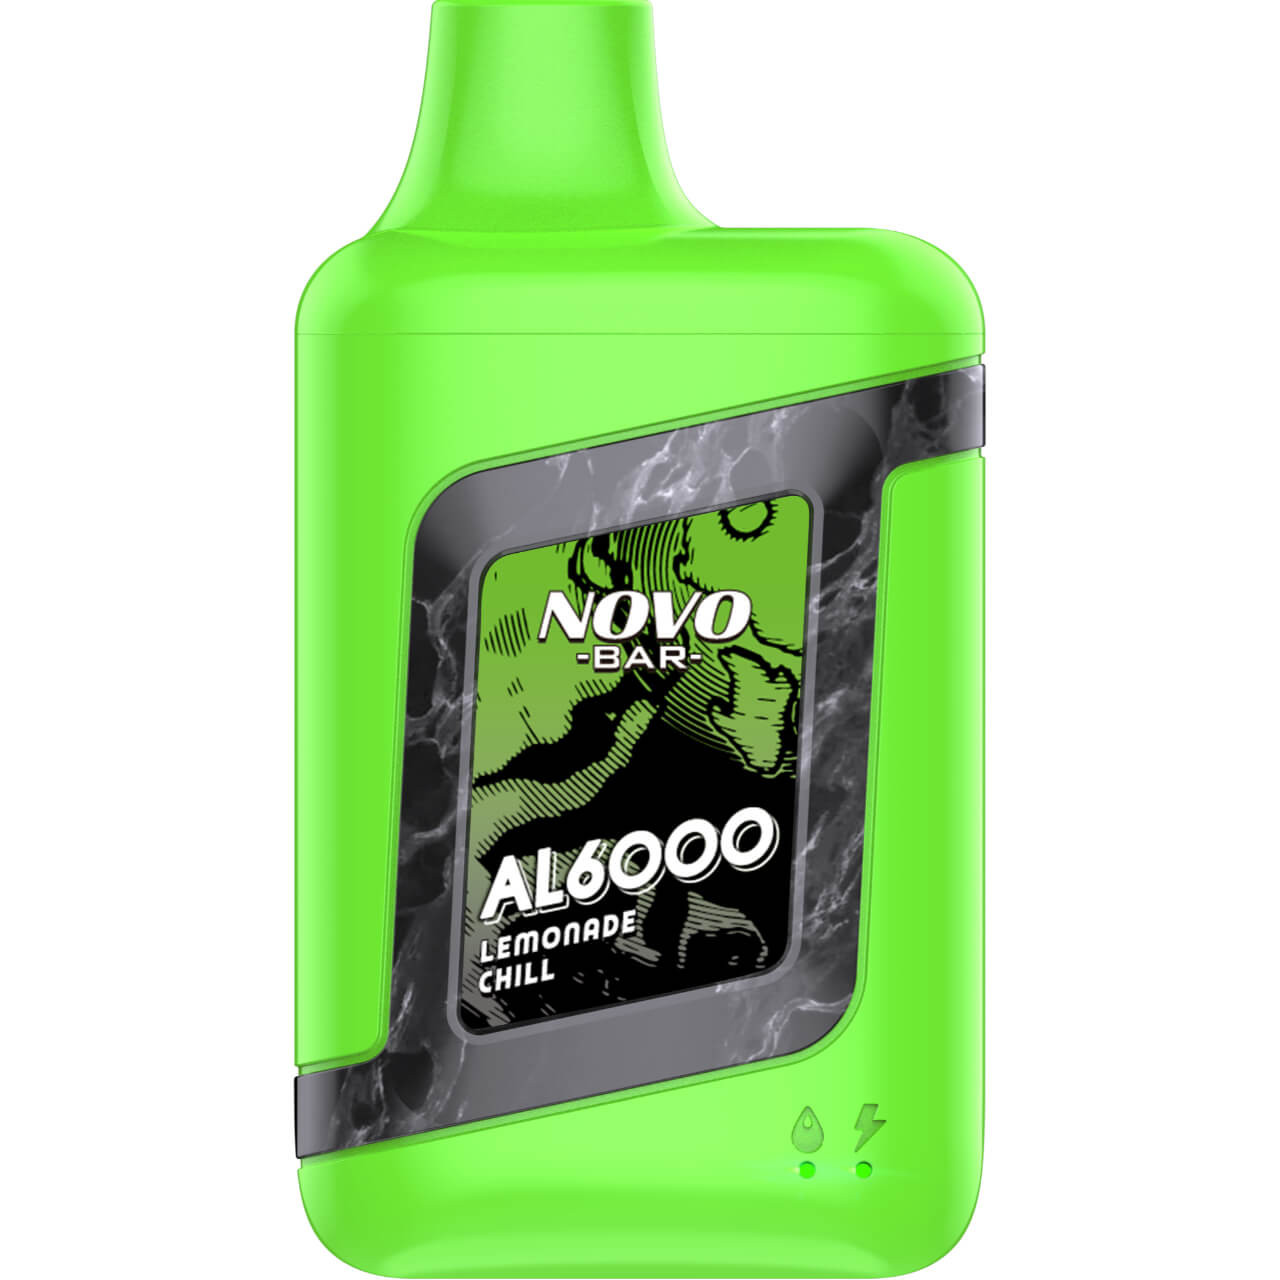 SMOK NOVO Bar AL6000 Disposable Device (6000 Puffs) -Lemonade chill